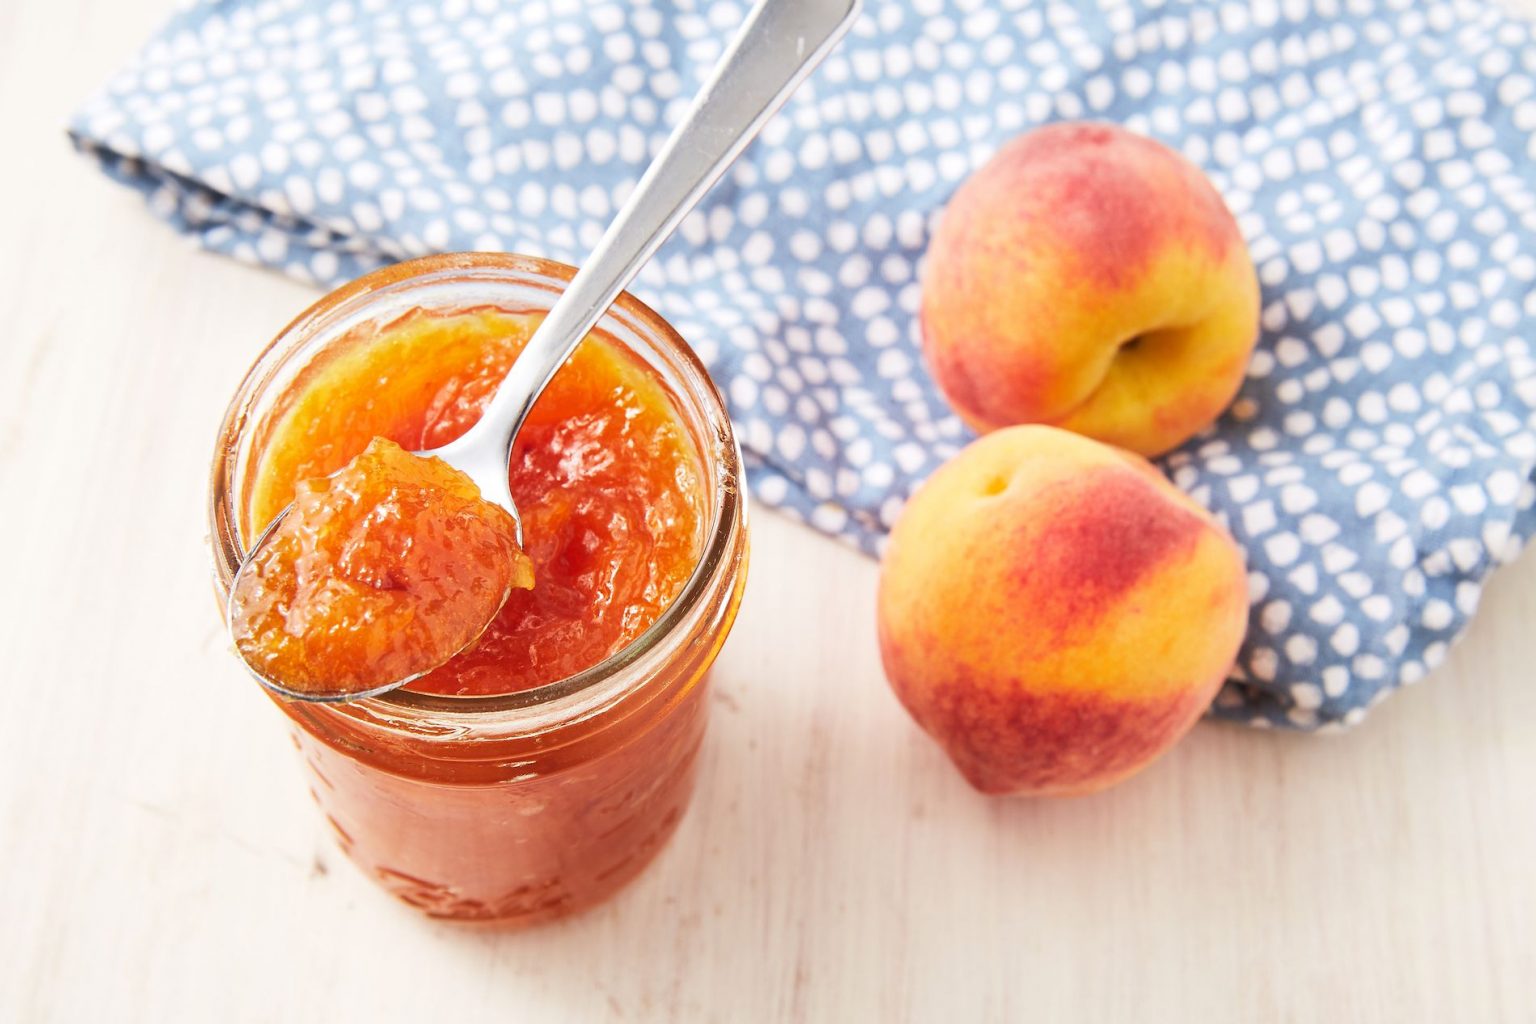 peach jam table npr kitchen show